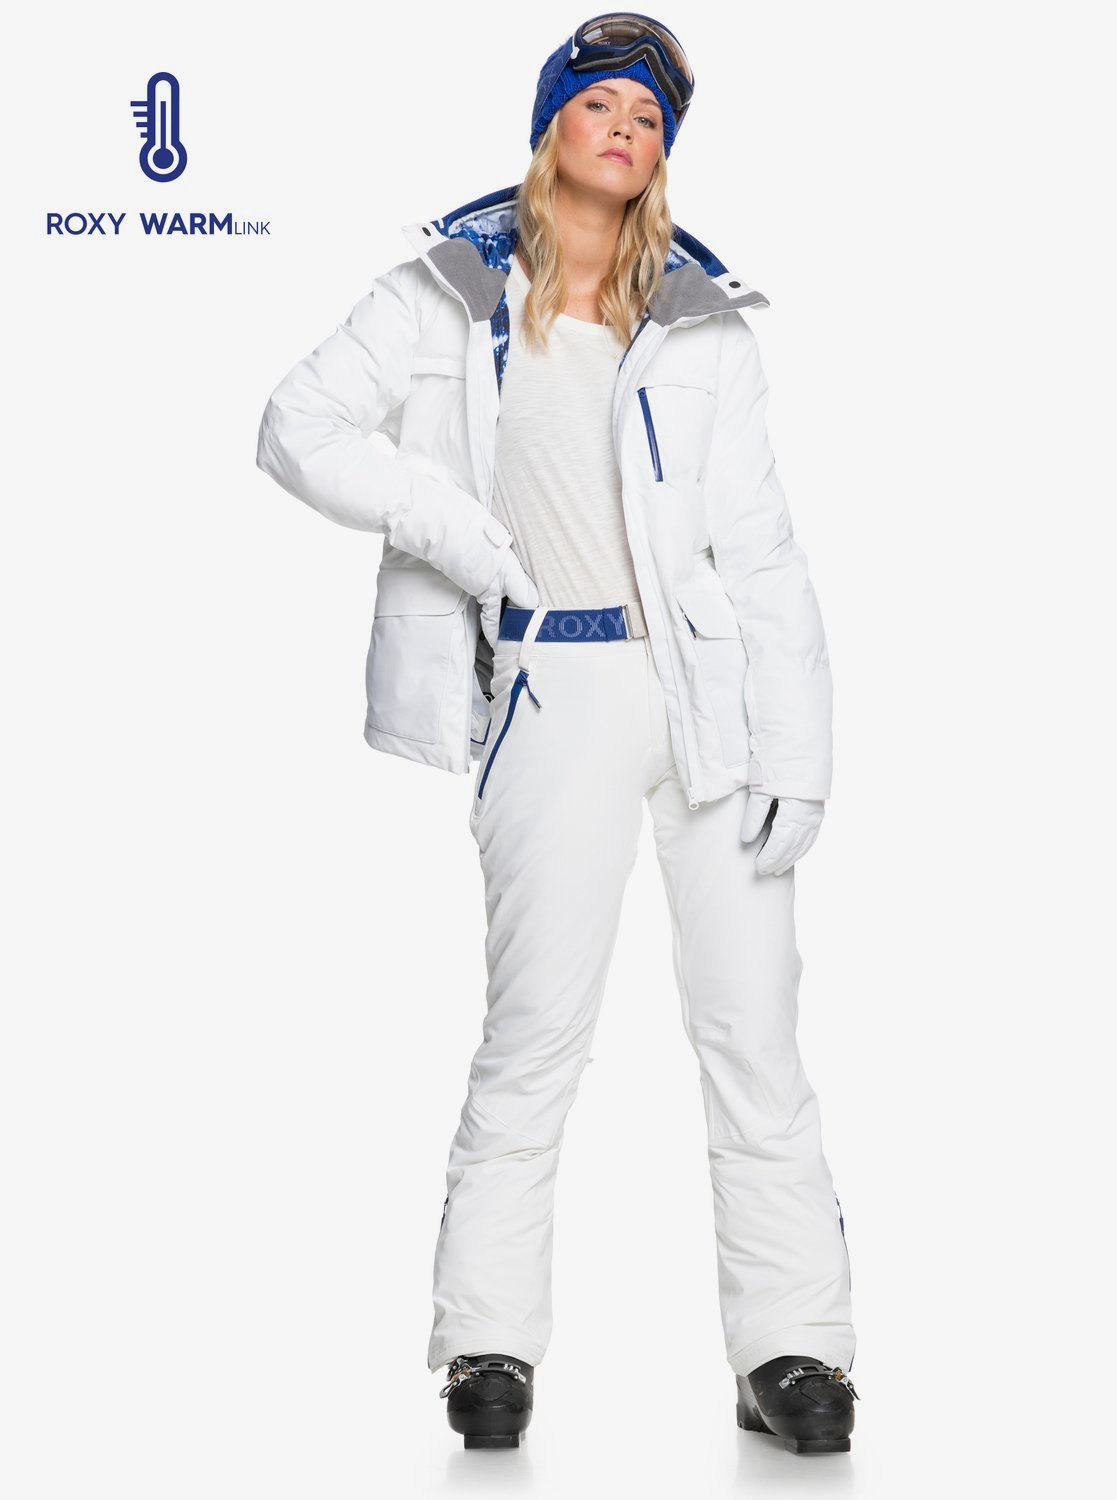 Roxy Women's Premiere Snow Jacket White Full Body Front View